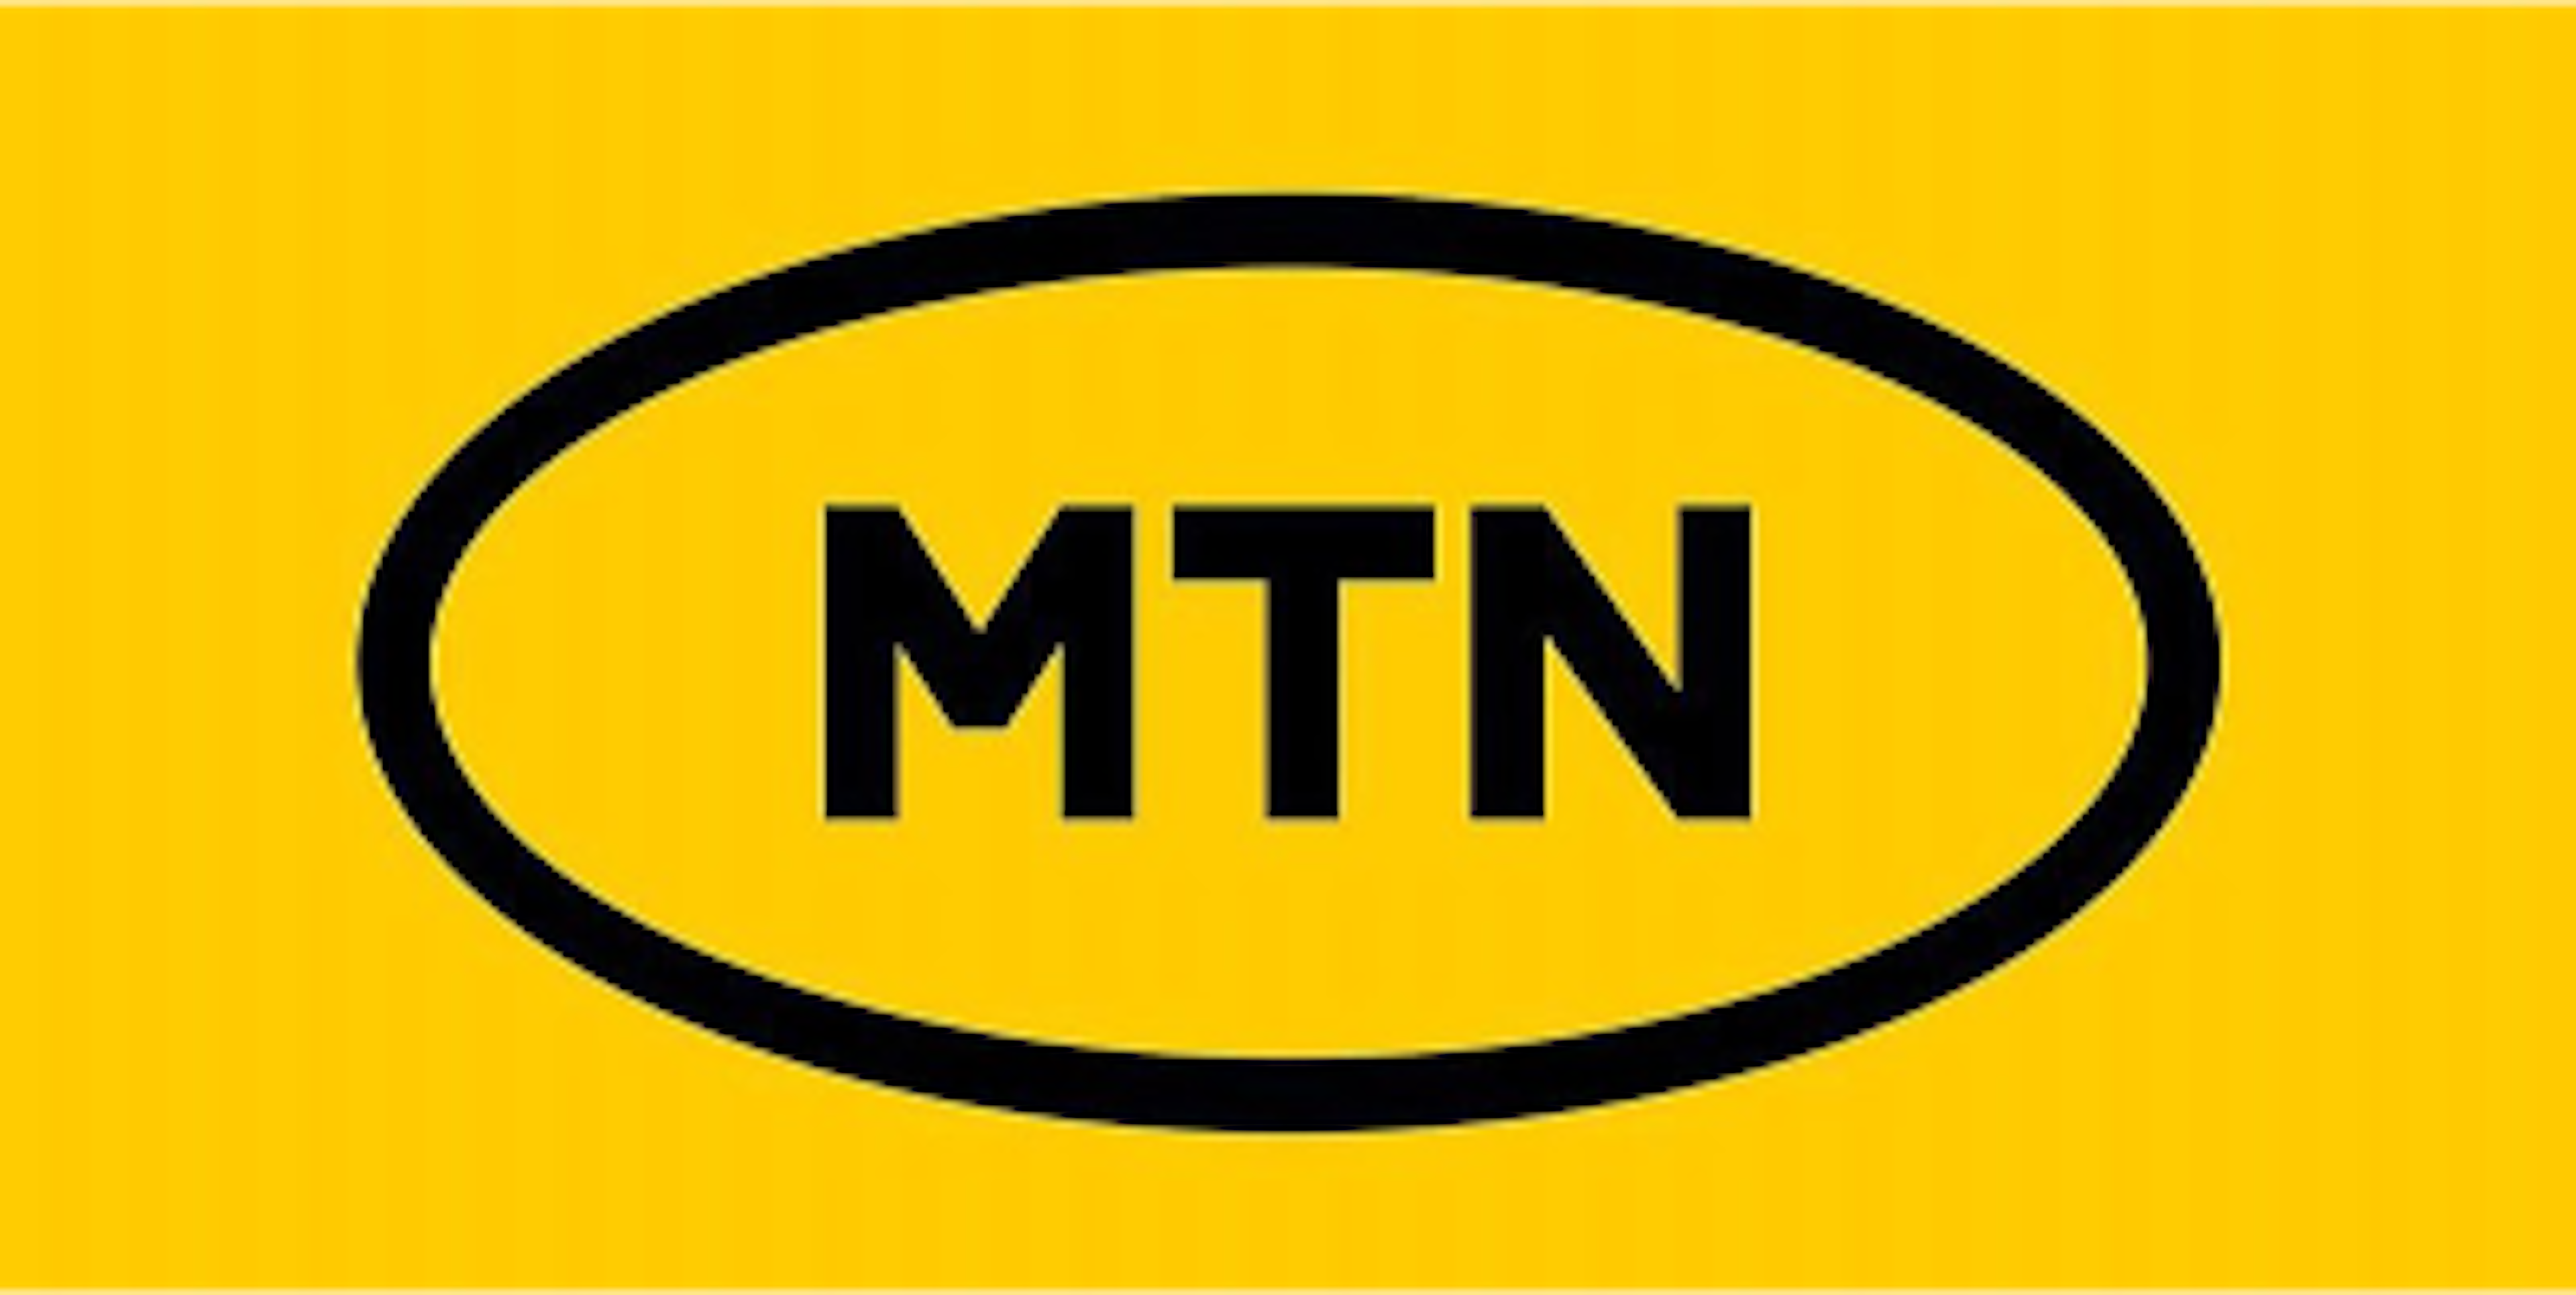 New-mtn-logo.png